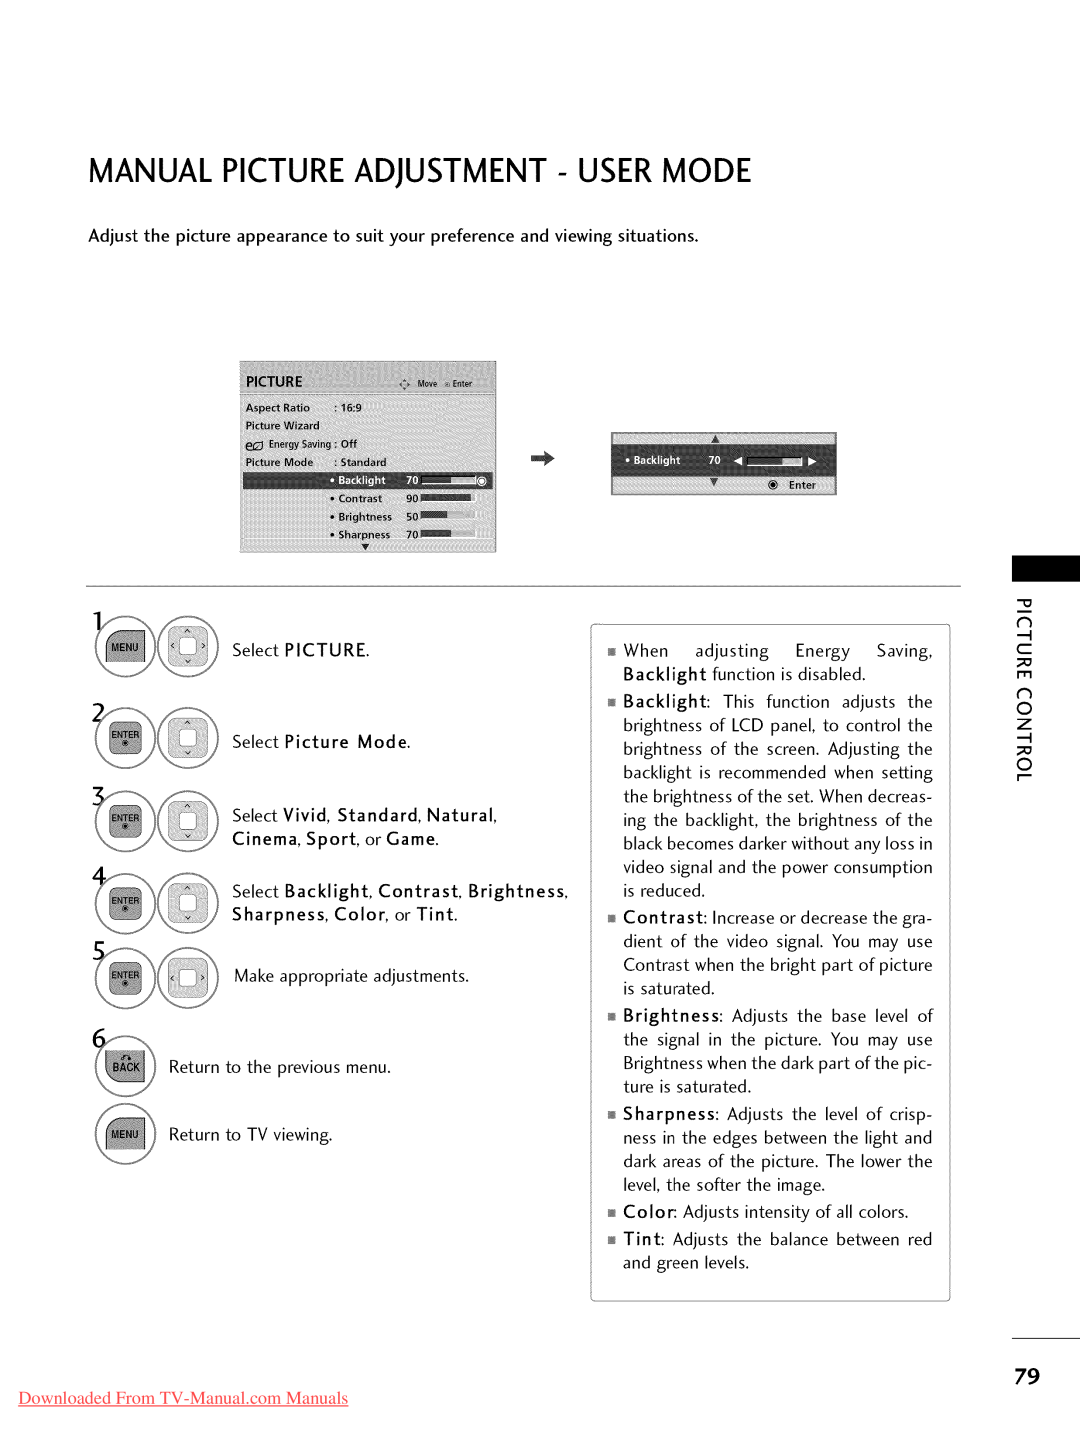 LG Electronics 42LD450, 32LD350, 47LD450, 47LD520 Manual Pictureadjustment- Usermode, Downloaded From TV-Manual.com Manuals 